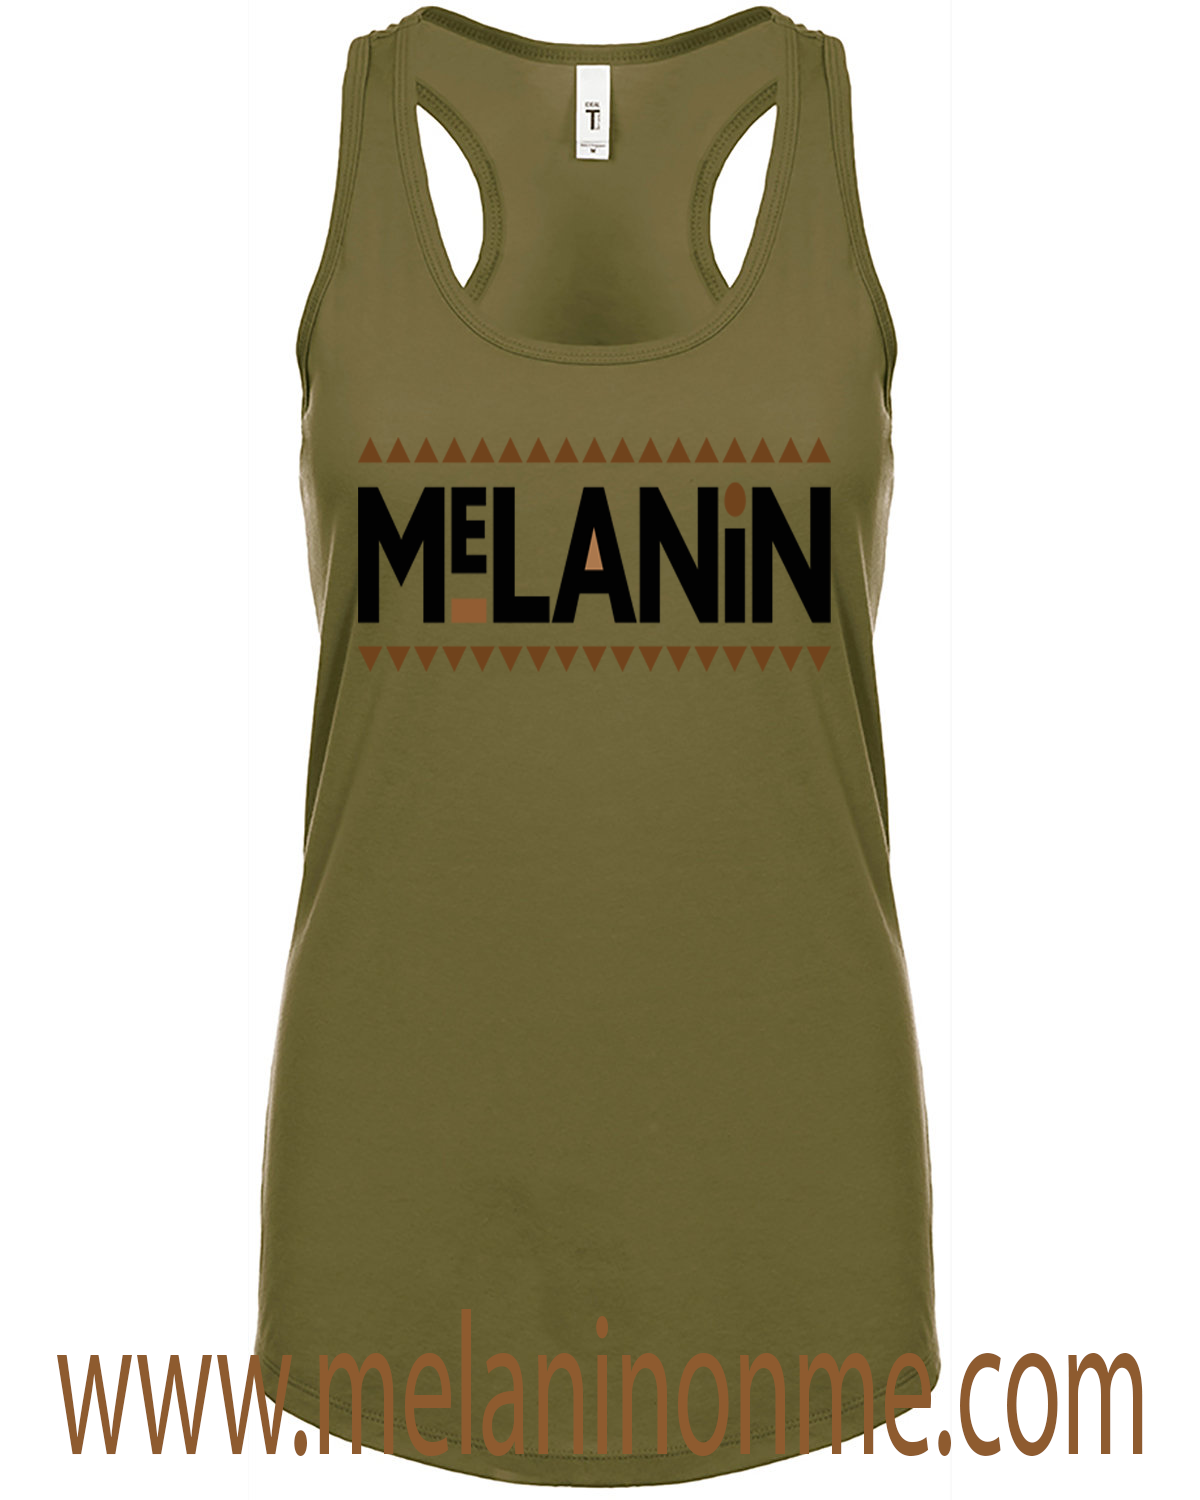 Melanin Martin Tank Top